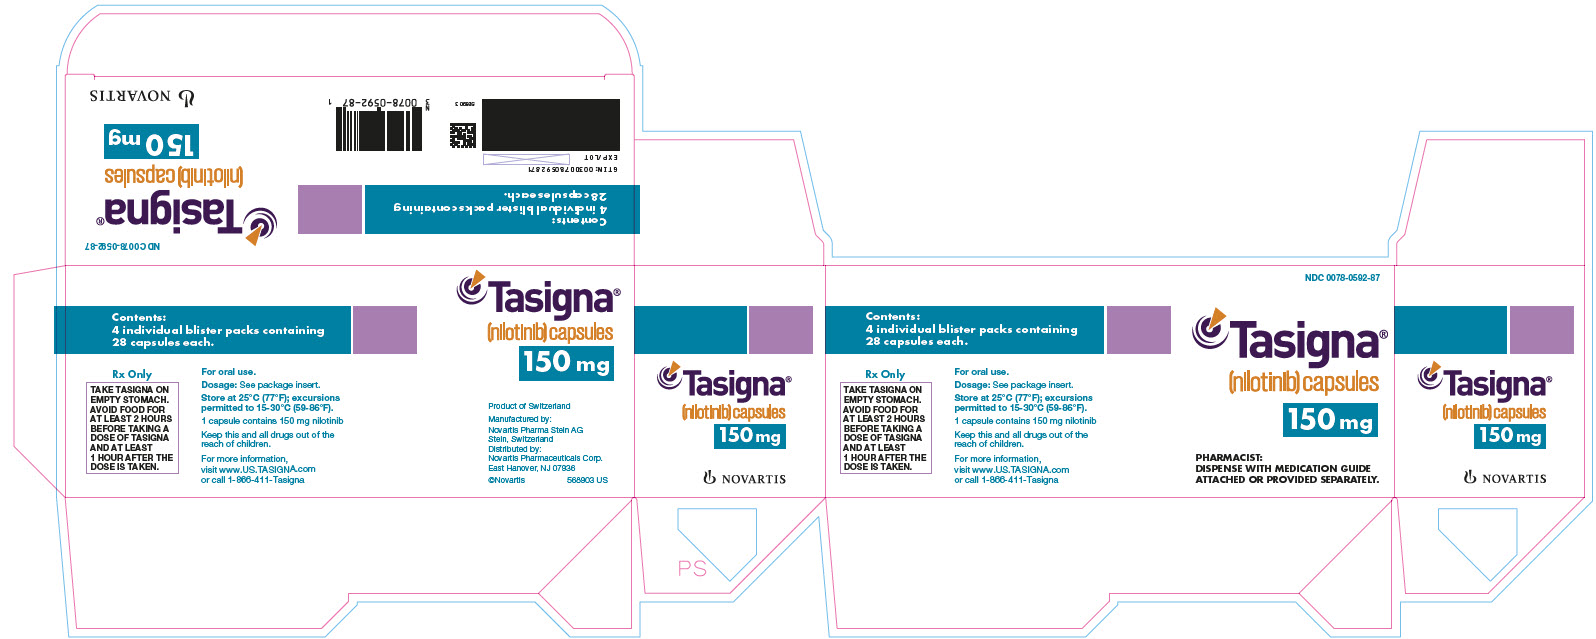 PRINCIPAL DISPLAY PANEL
								NDC 0078-0592-87
								Tasigna
								(nilotinib) capsules
								150 mg
							